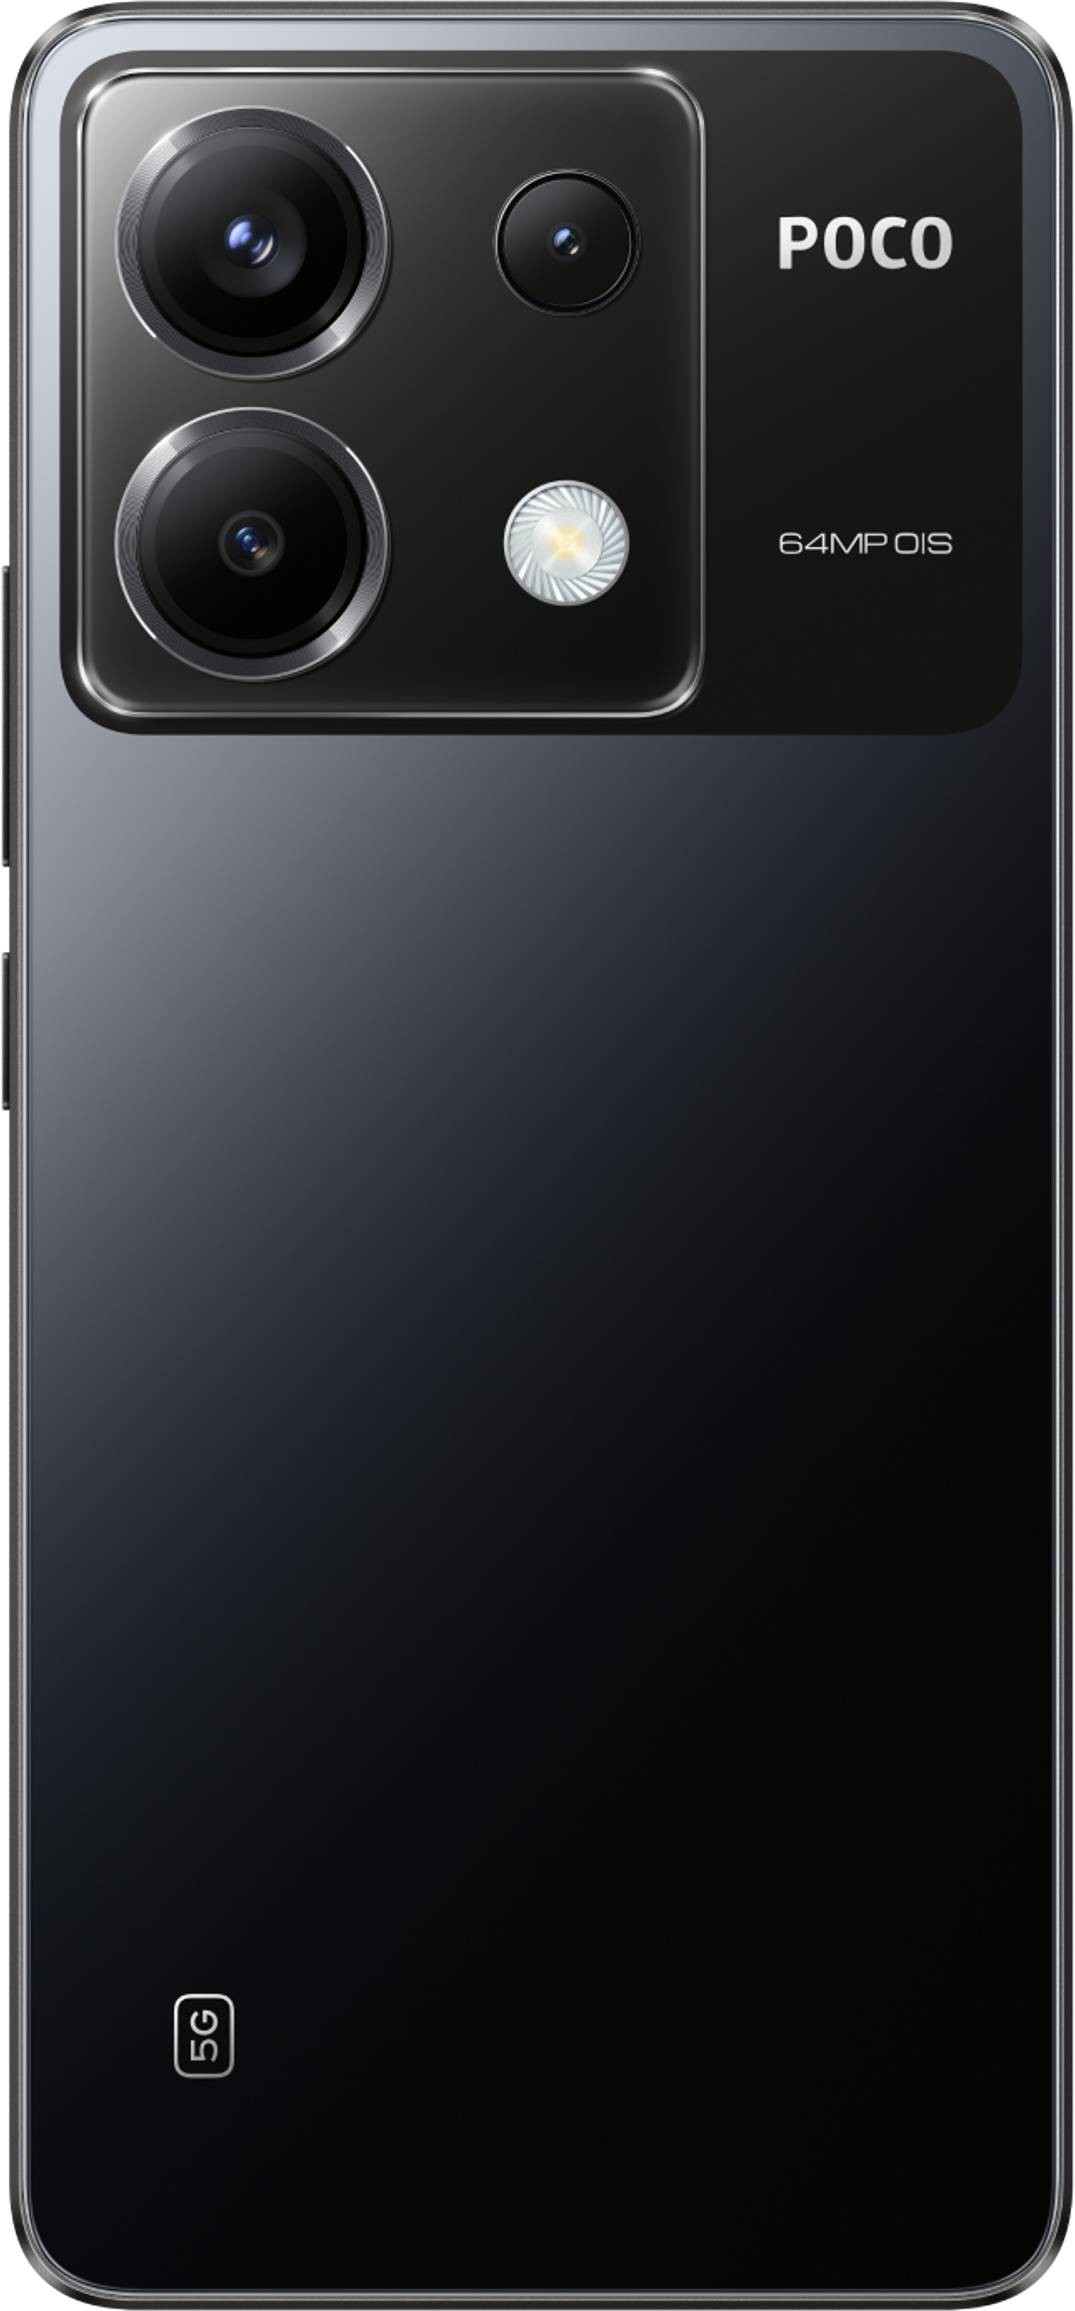 XIAOMI Smartphone POCO X6 5G 512Go Noir - POCOX65G12512N